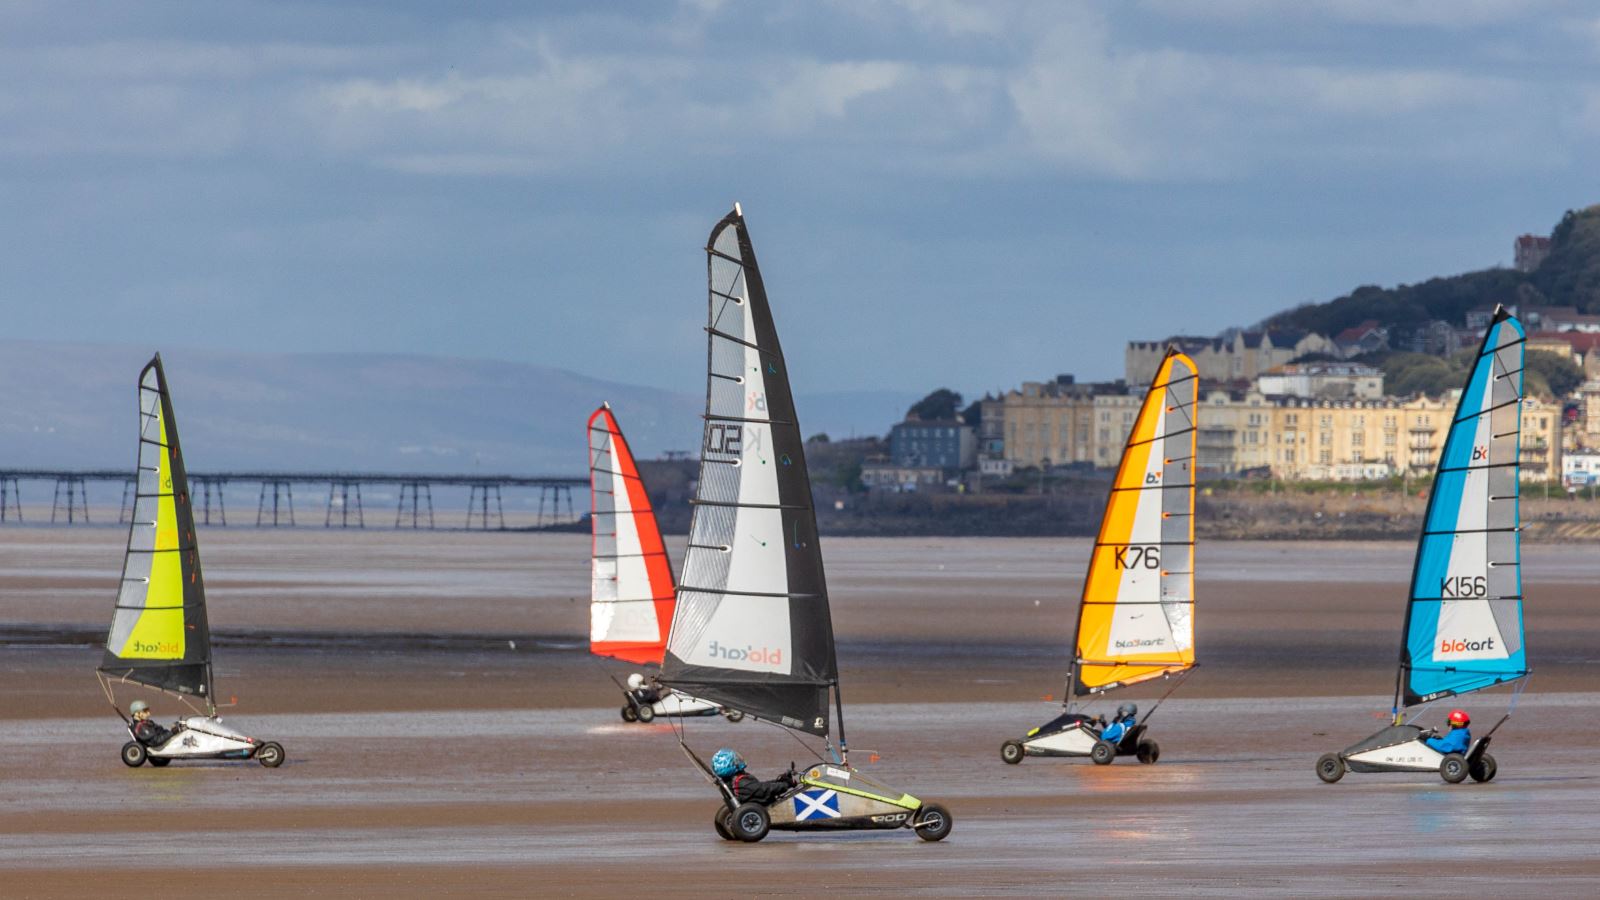 Blokarters racing their sand karts on a beach